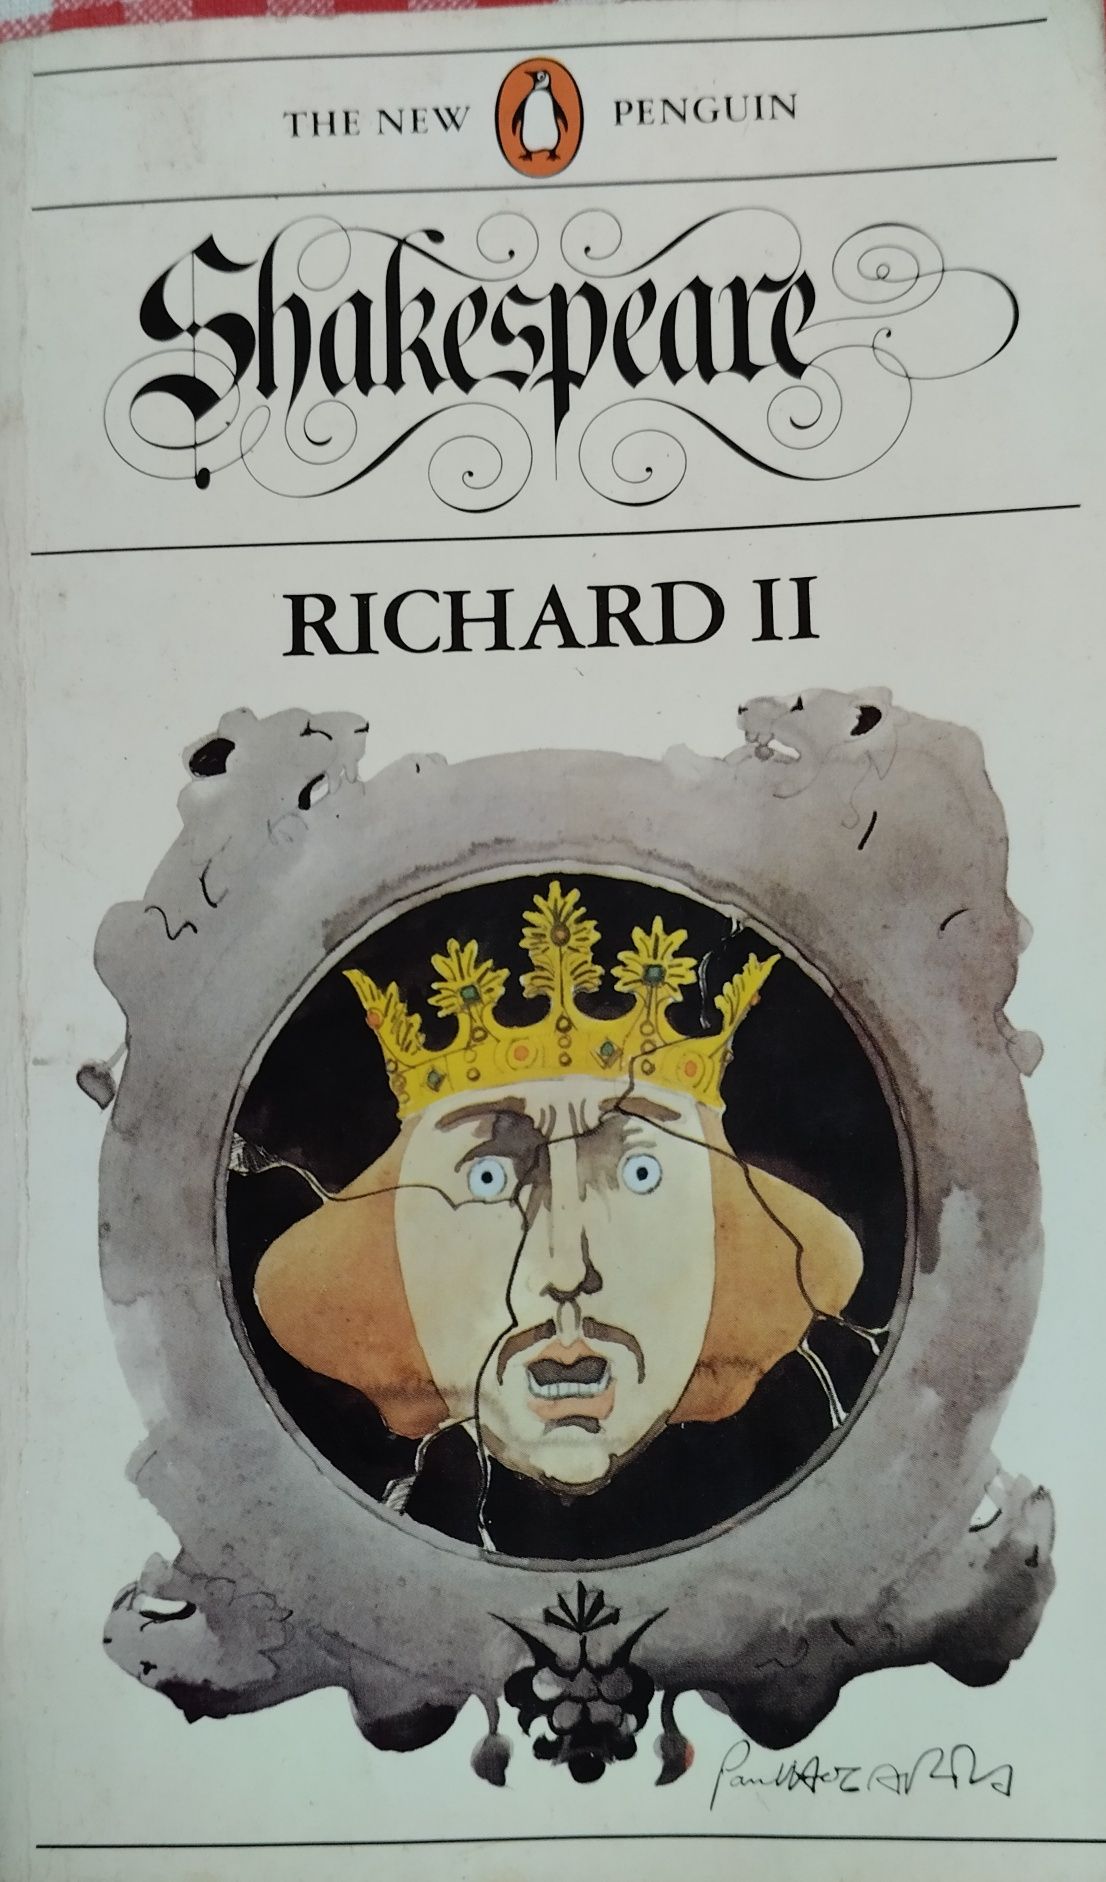 Obra de Shakespeare "Richard II"